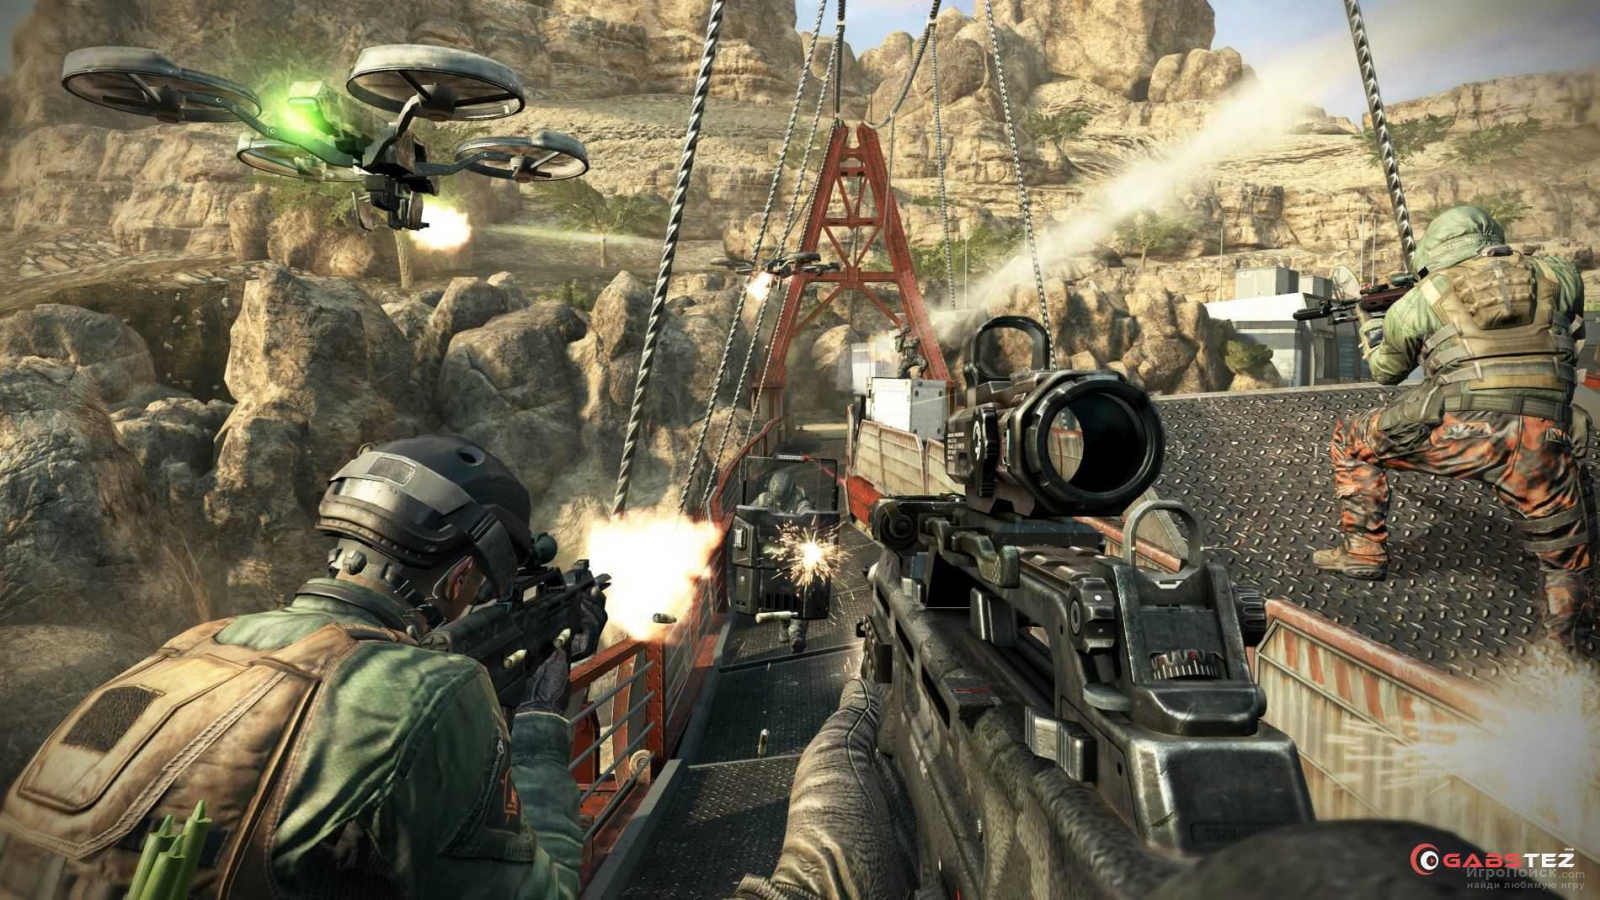    Call of Duty: Black Ops III